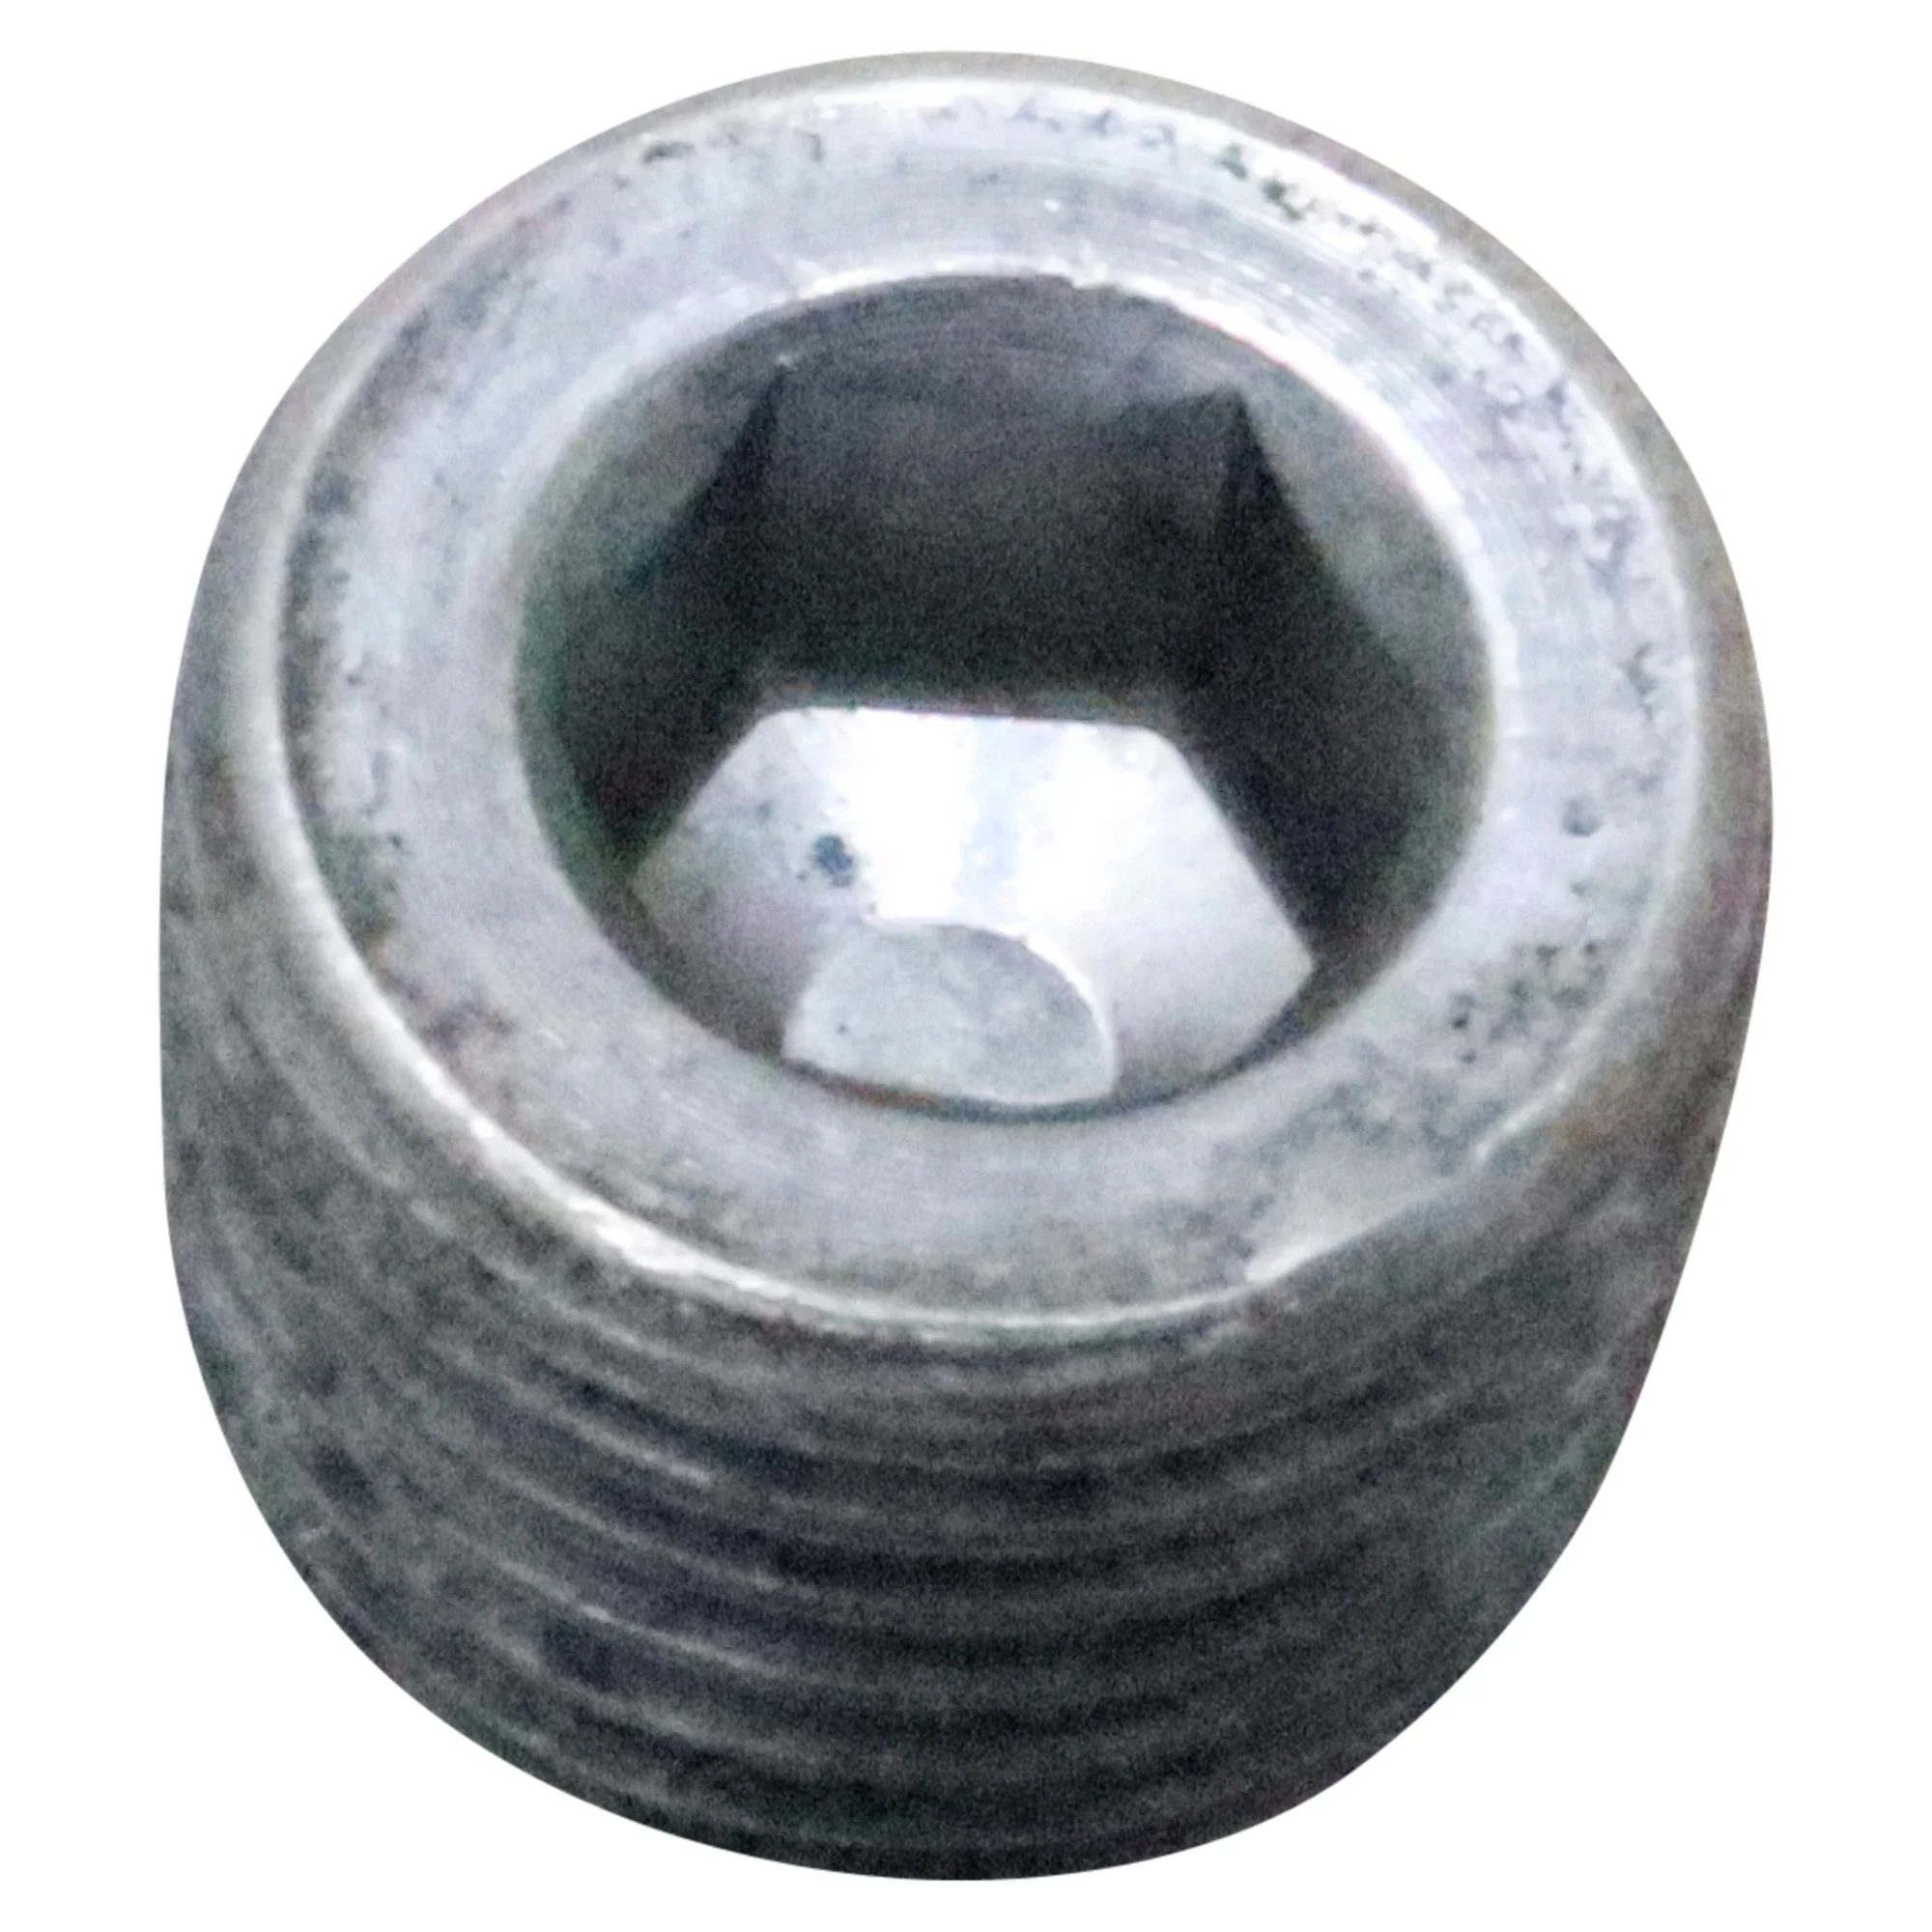 Galbreath™ Fitting Plug,1/4" Hex Socket Pipe